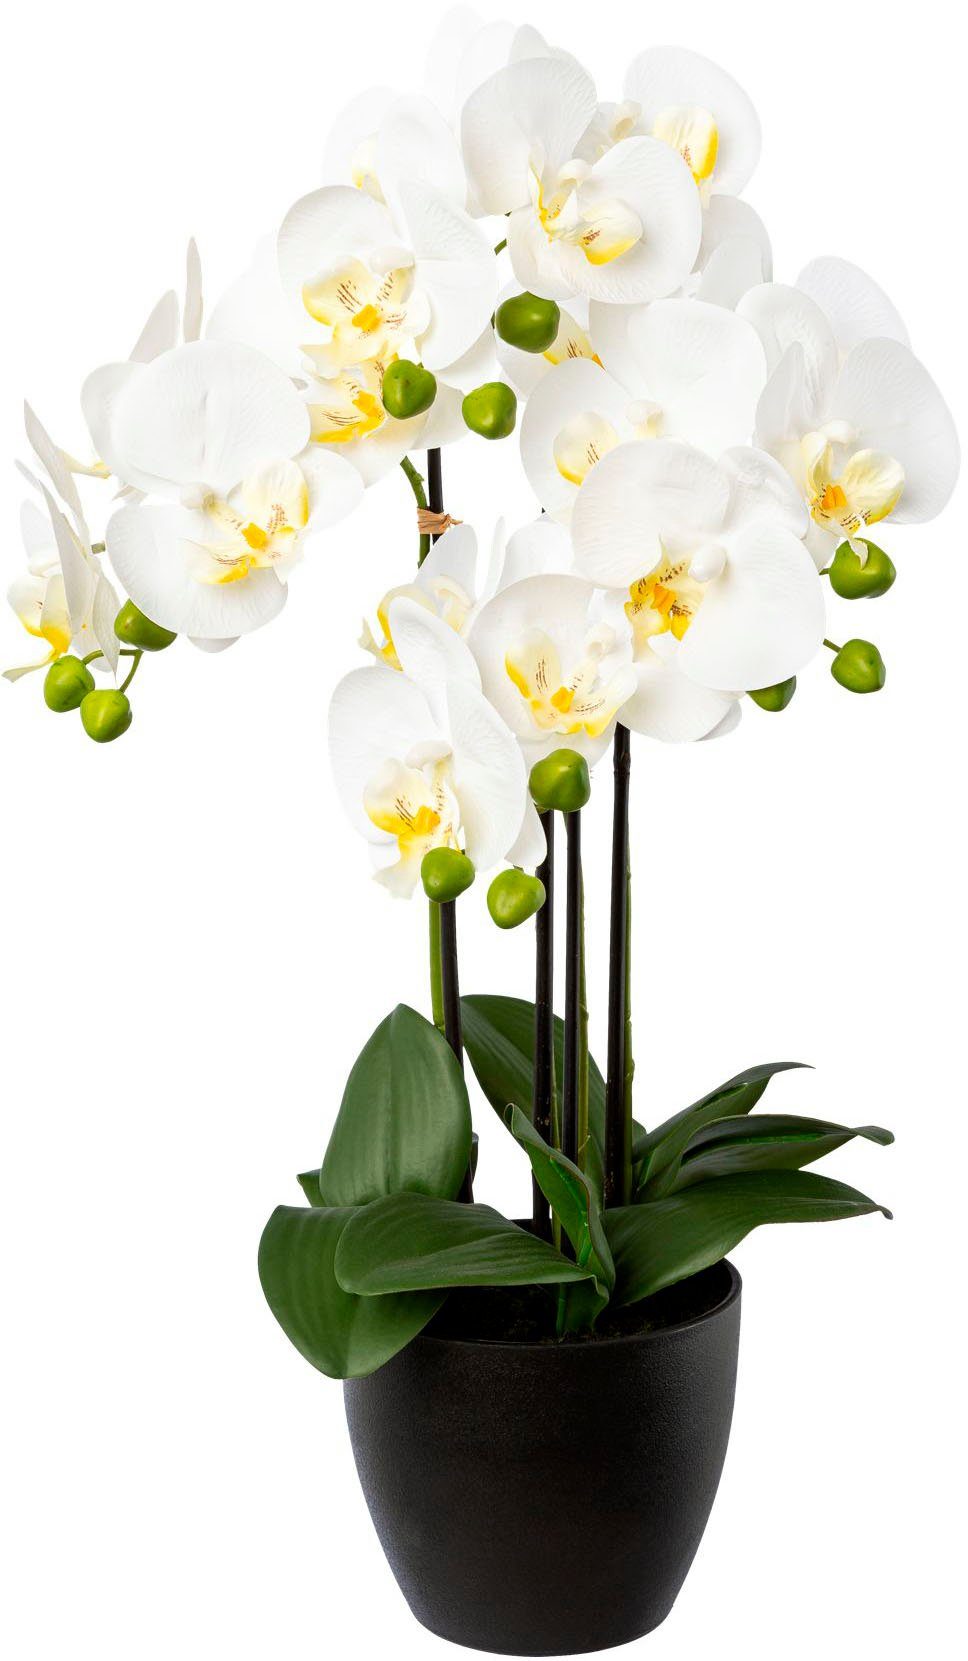 Creativ Resintopf Phalaenopsis 55 Höhe cm, Orchidee Kunstorchidee mit Phalaenopsis, Real-Touch-Blüten green, im